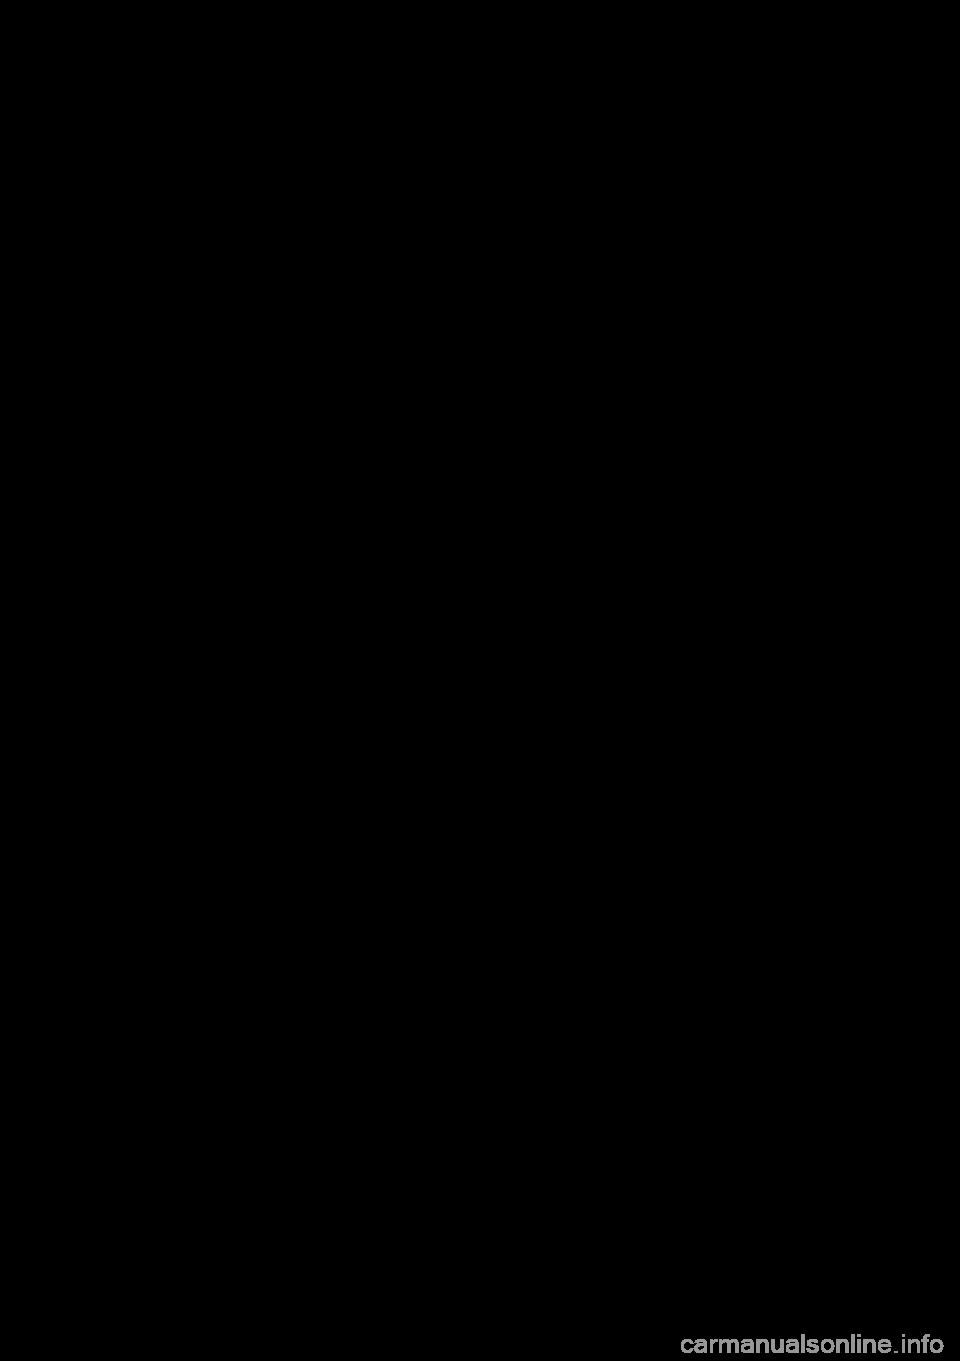 SUZUKI GRAND VITARA 2000 2.G Service Workshop Manual YH4
GRAND
VITARA
GENERAL INFORMATION 0A-21
A
ABS : Anti-lock Brake System
ATDC : After Top Dead Center
API : American Petroleum Institute
ATF : Automatic Transmission Fluid
ALR : Automatic Locking Ret